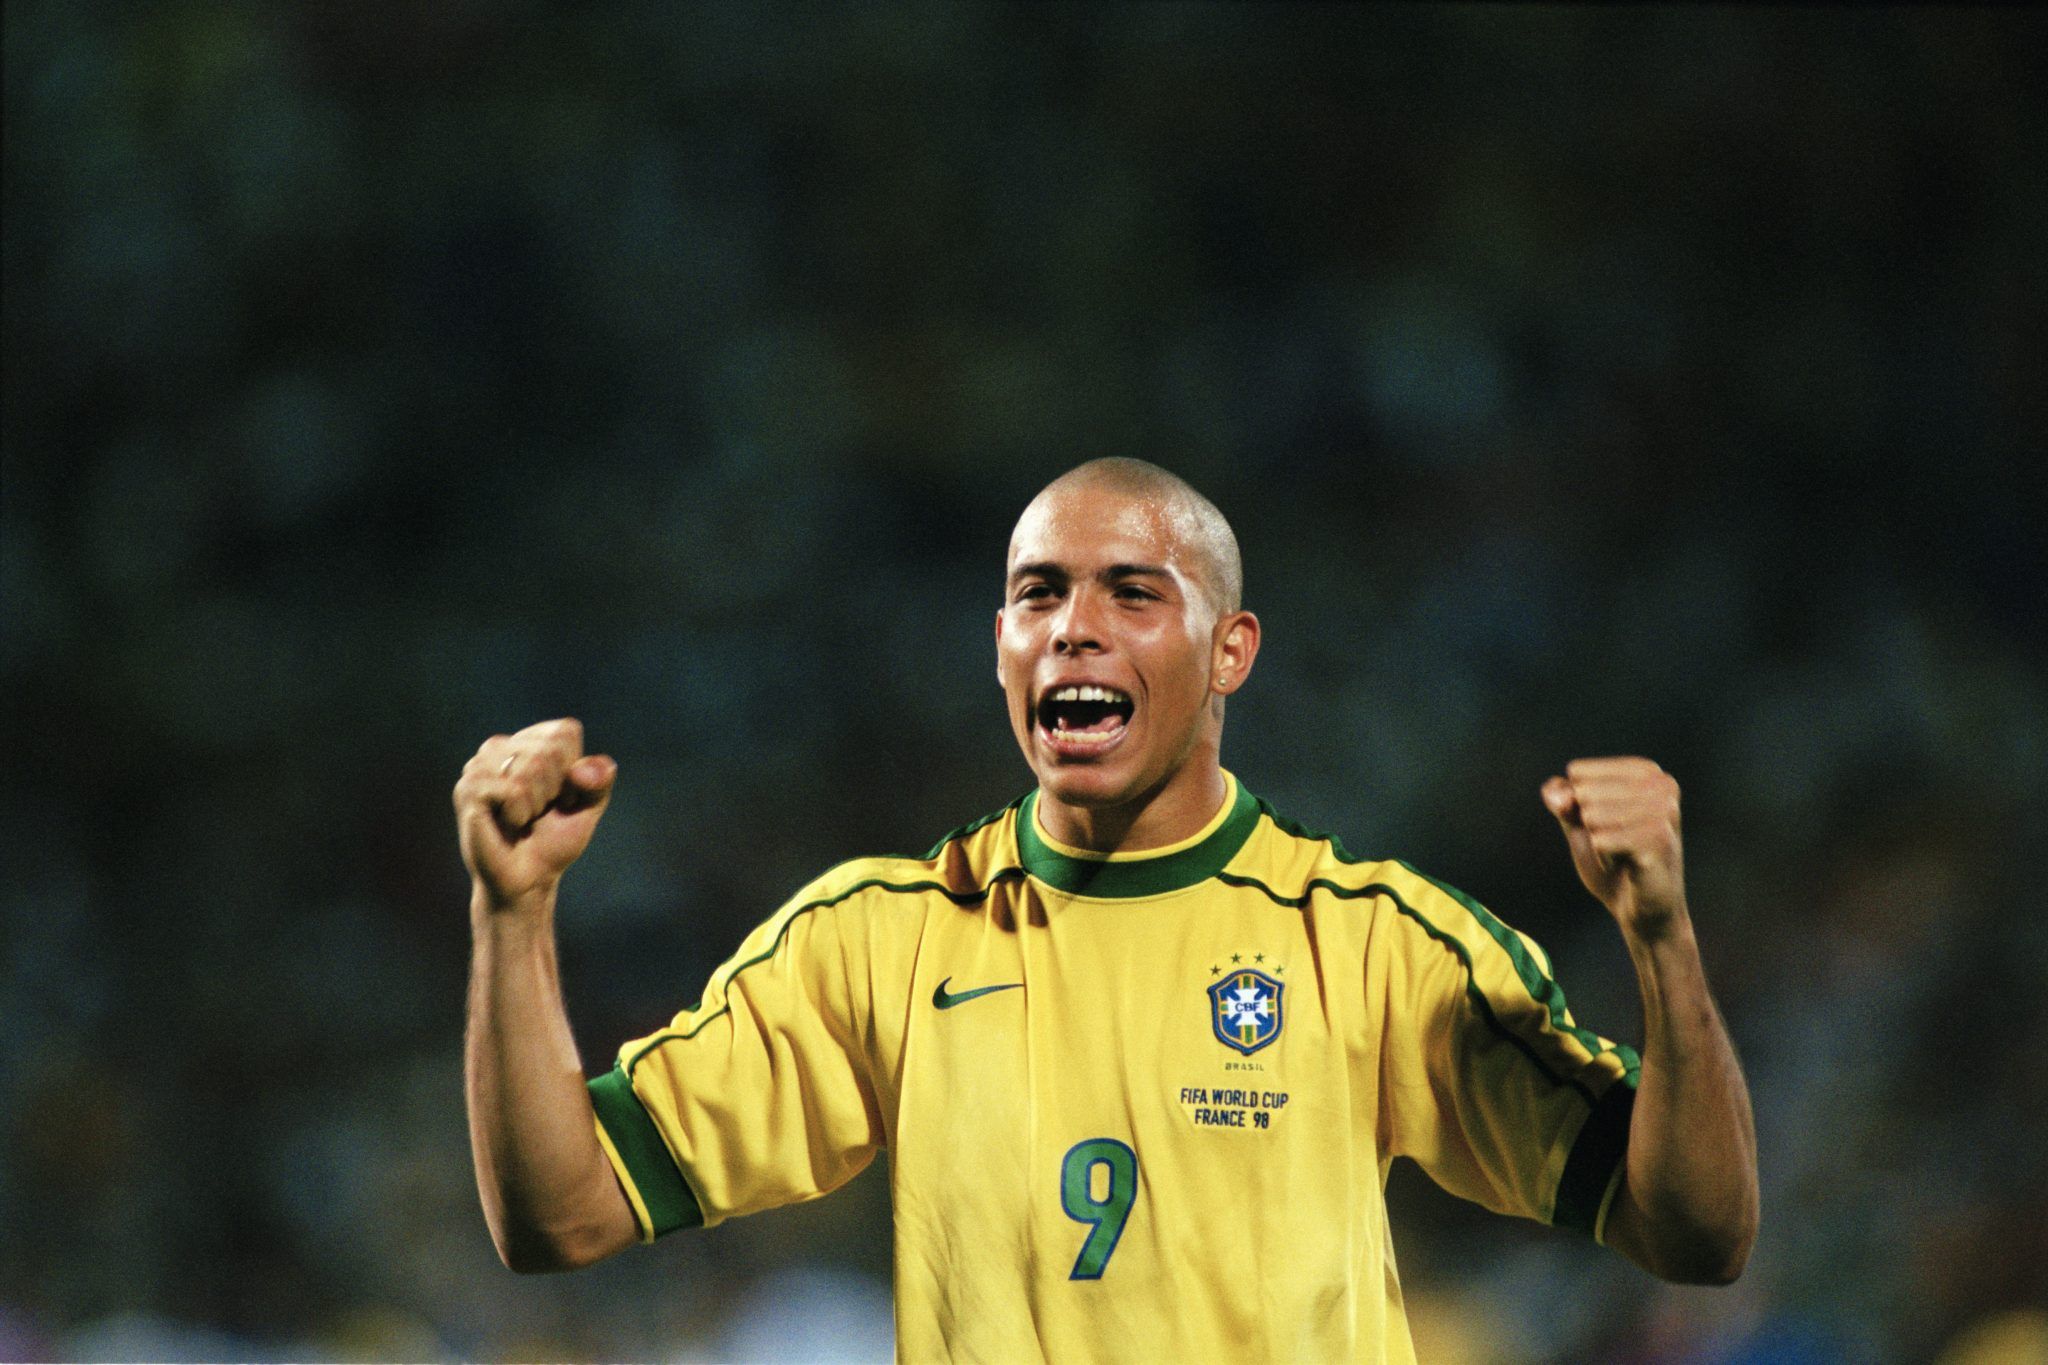 ronaldo 1998 world cup final